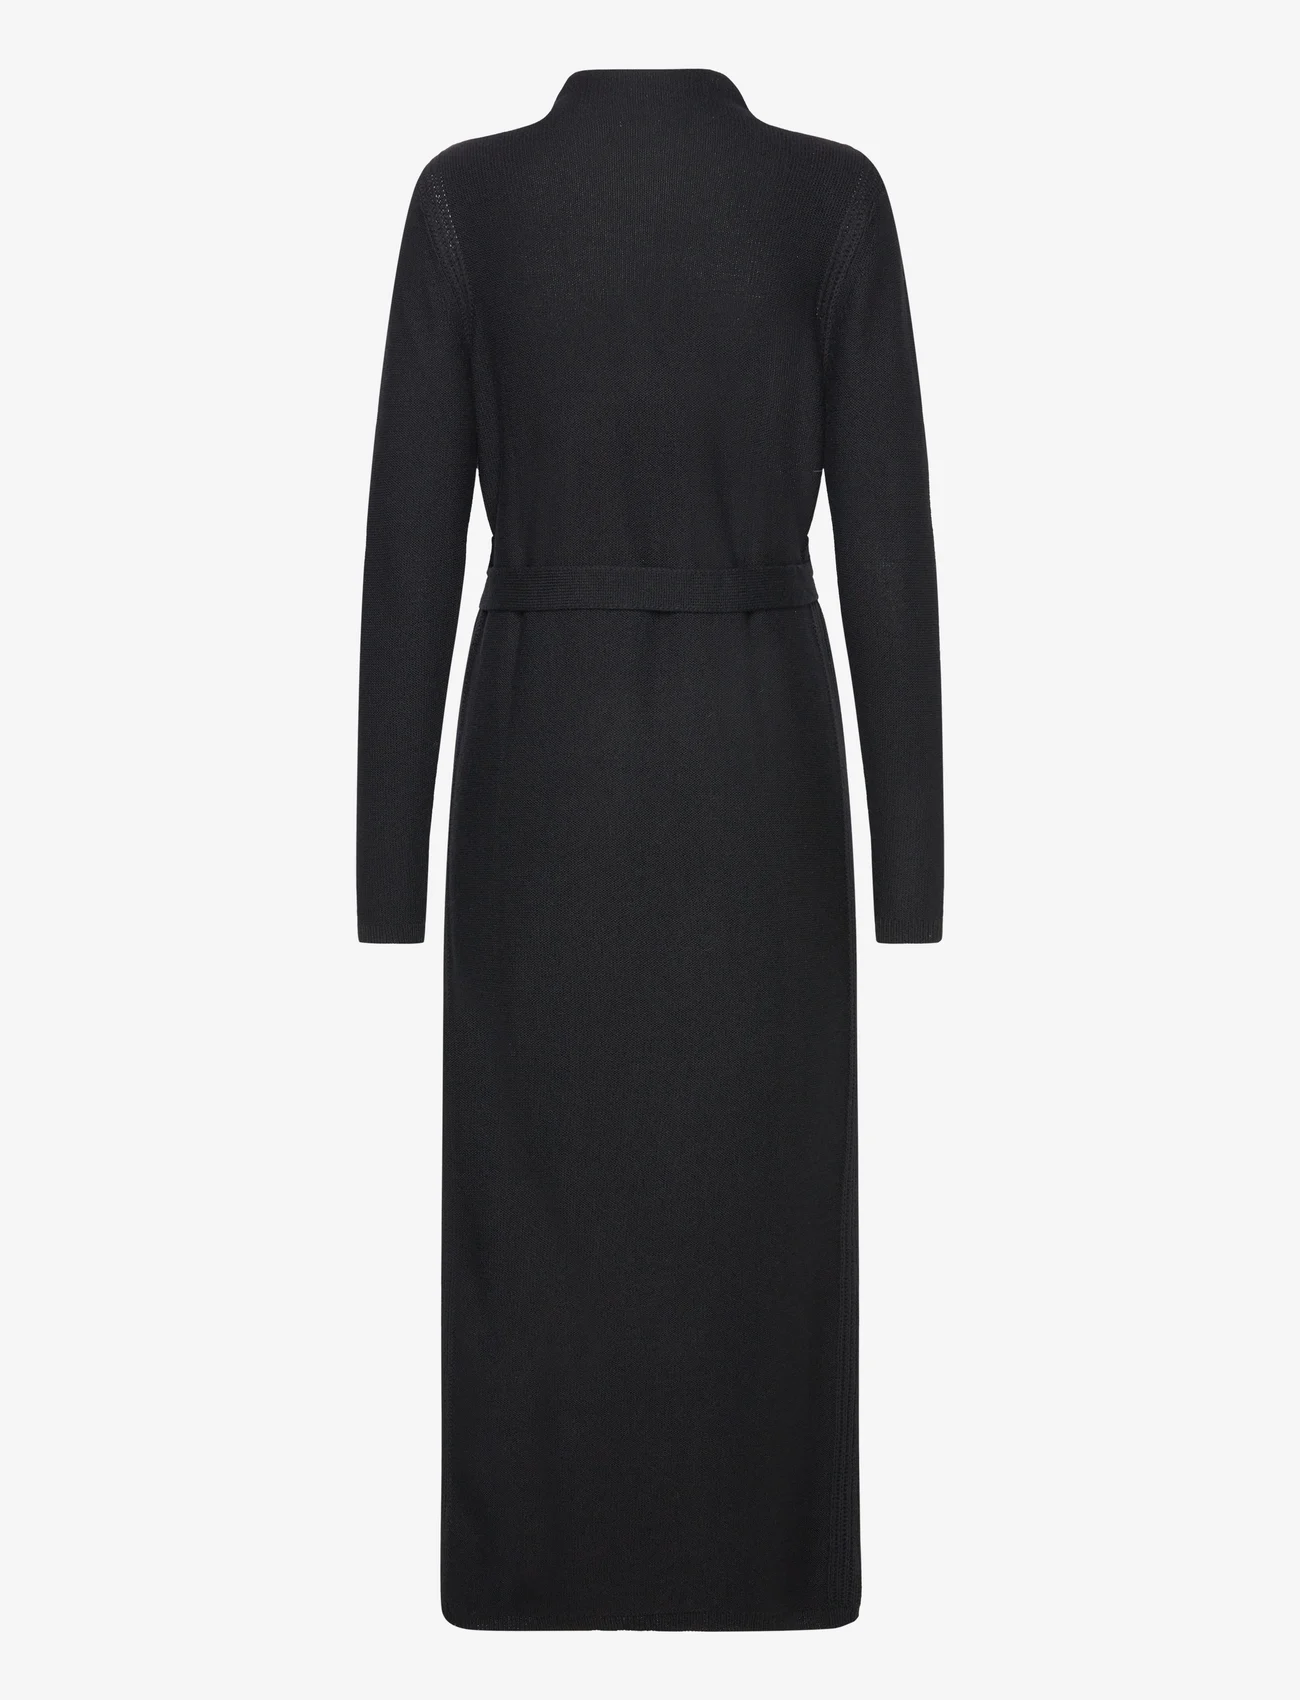 Andiata - Sera dress - knitted dresses - black - 1